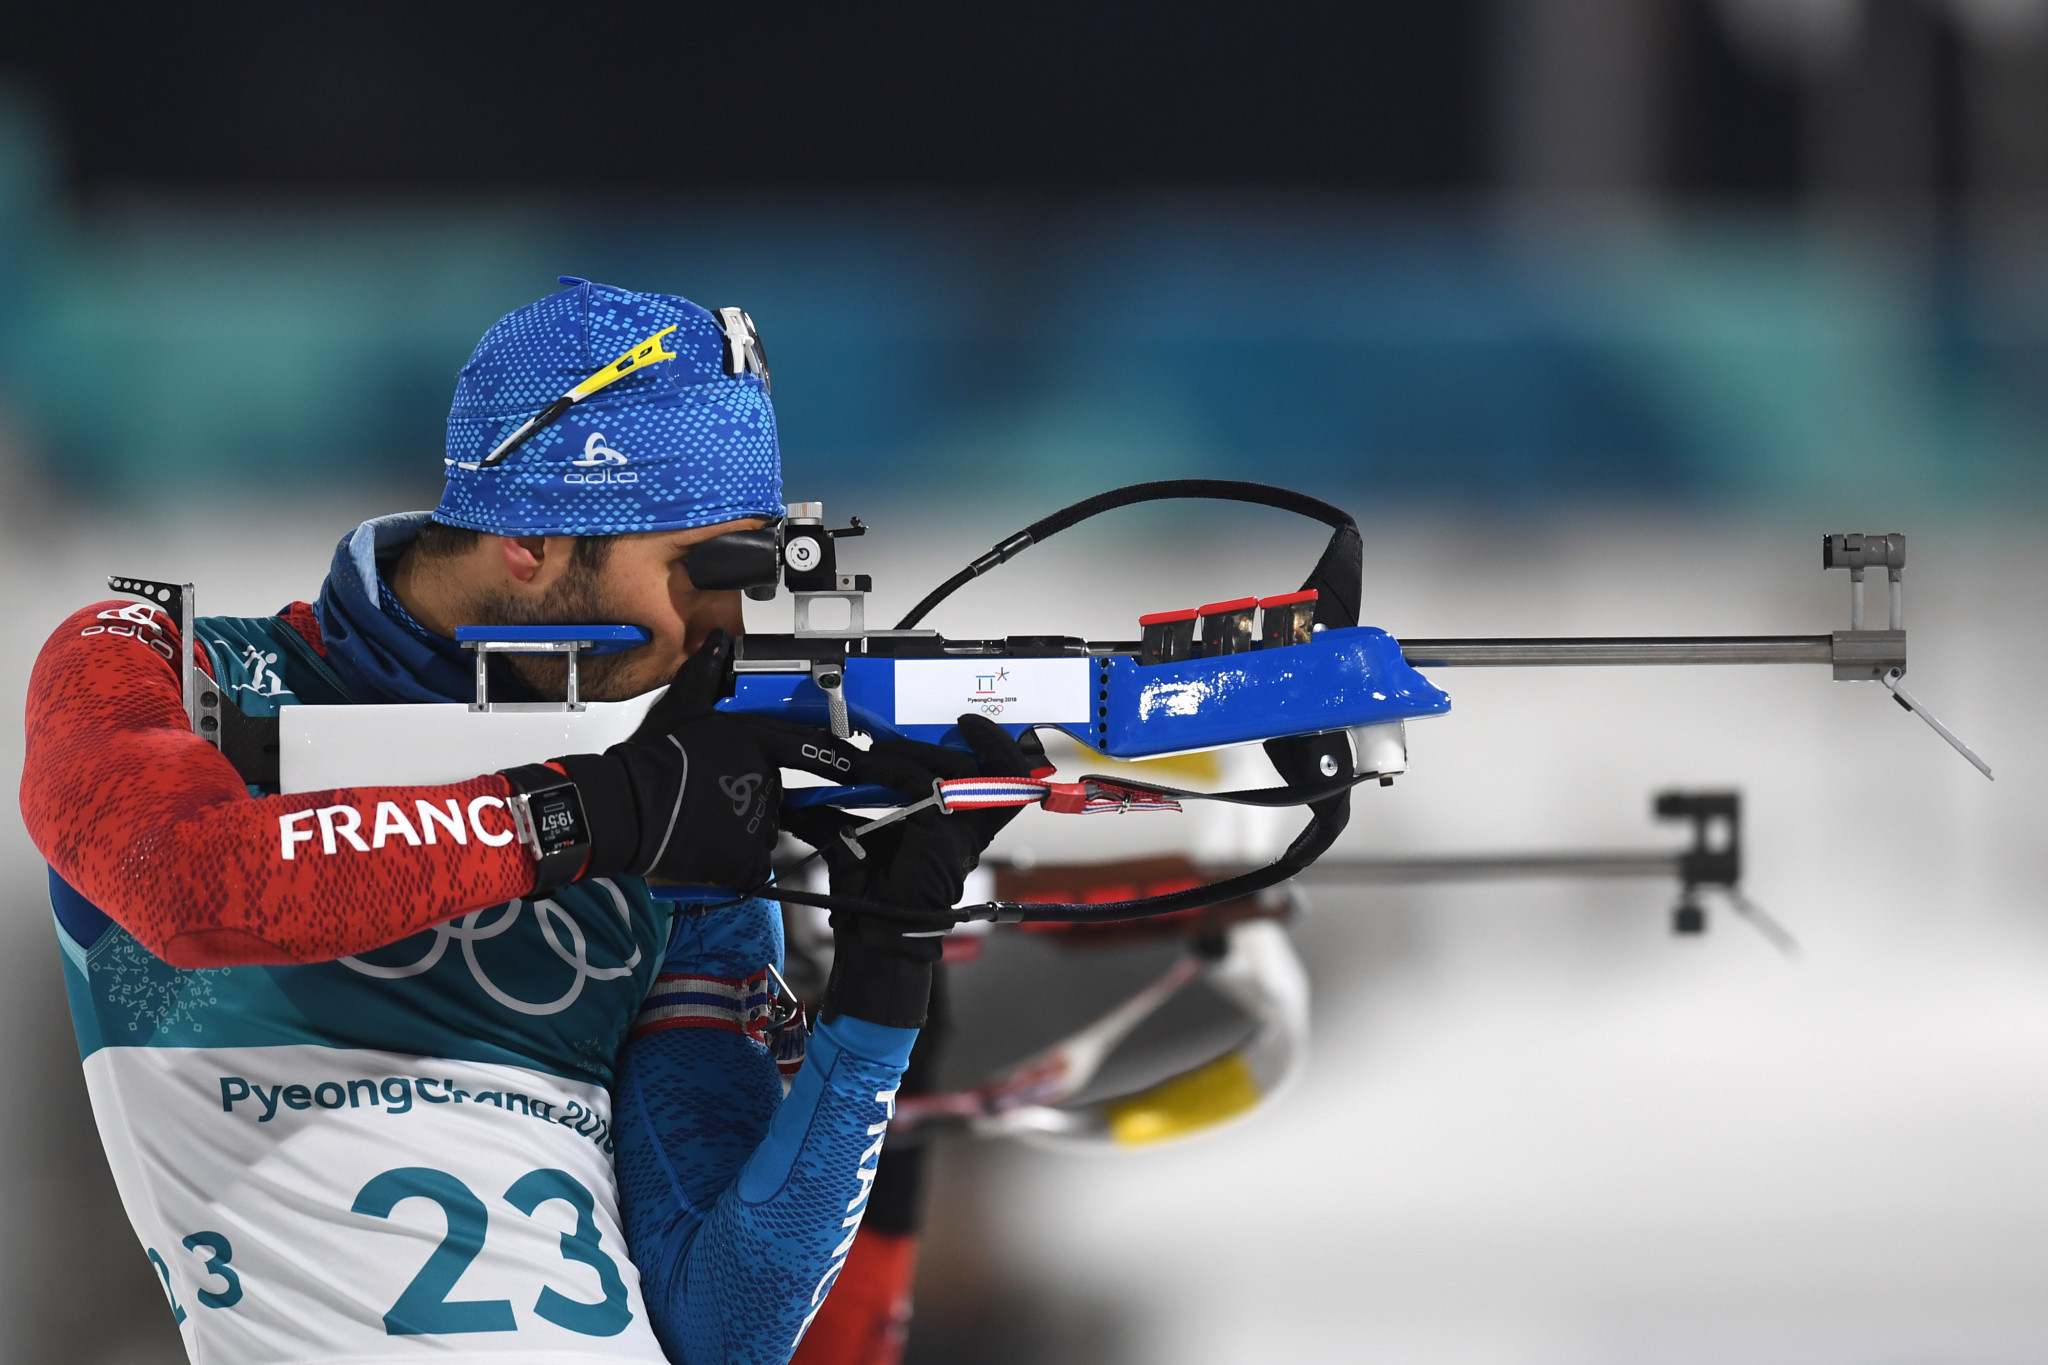 France's Martin Fourcade captured three biathlon titles ©Getty Images